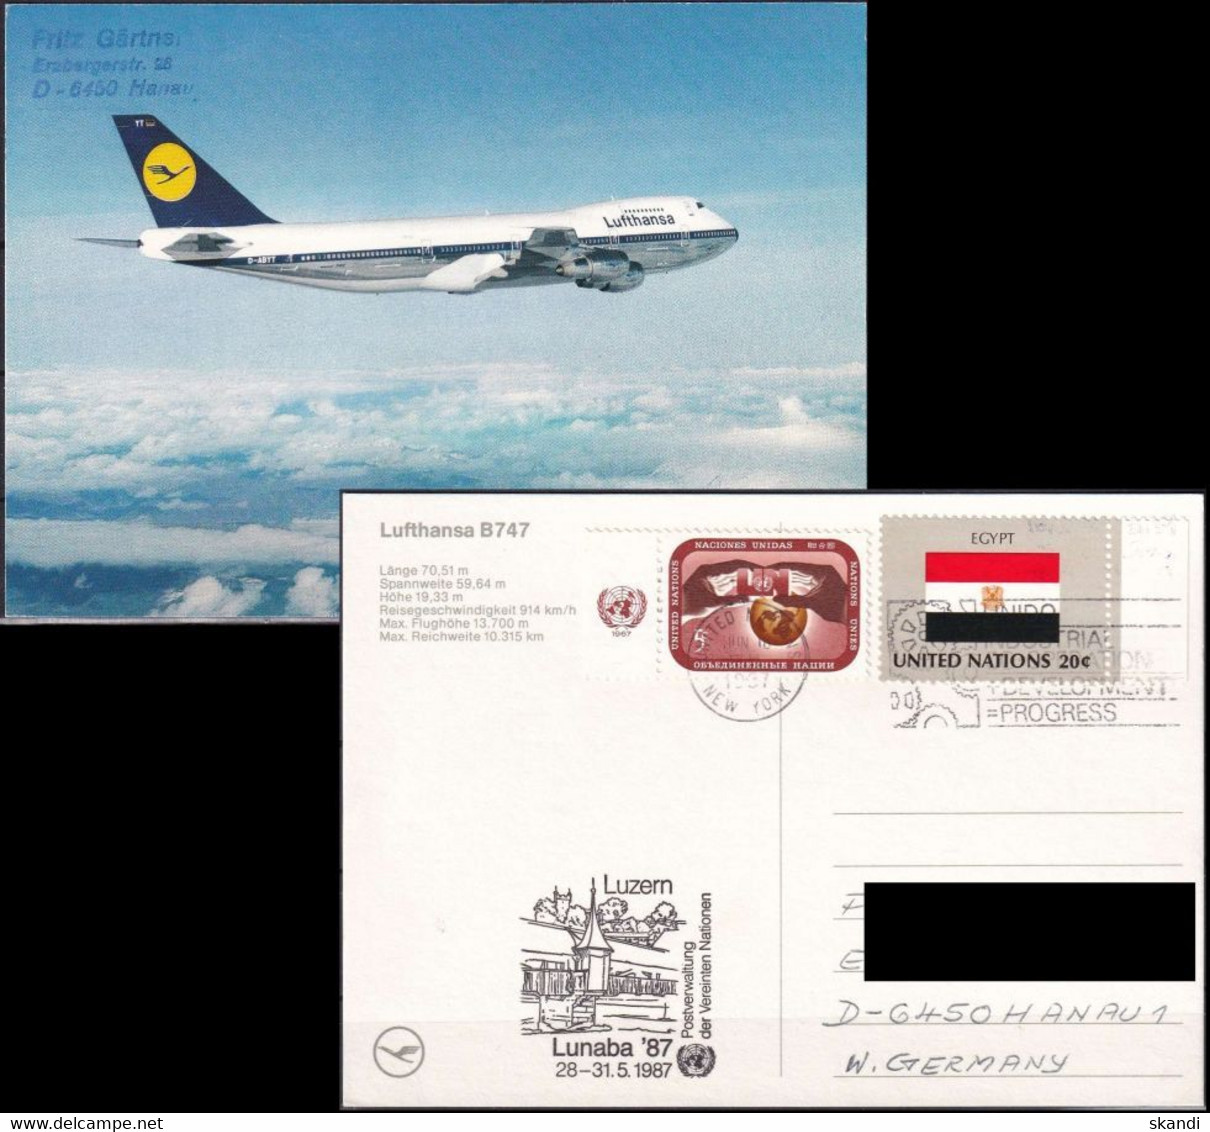 UNO NEW YORK 1987 Postkarte Lunaba'87 Lufthansa Boeing 747 - Covers & Documents